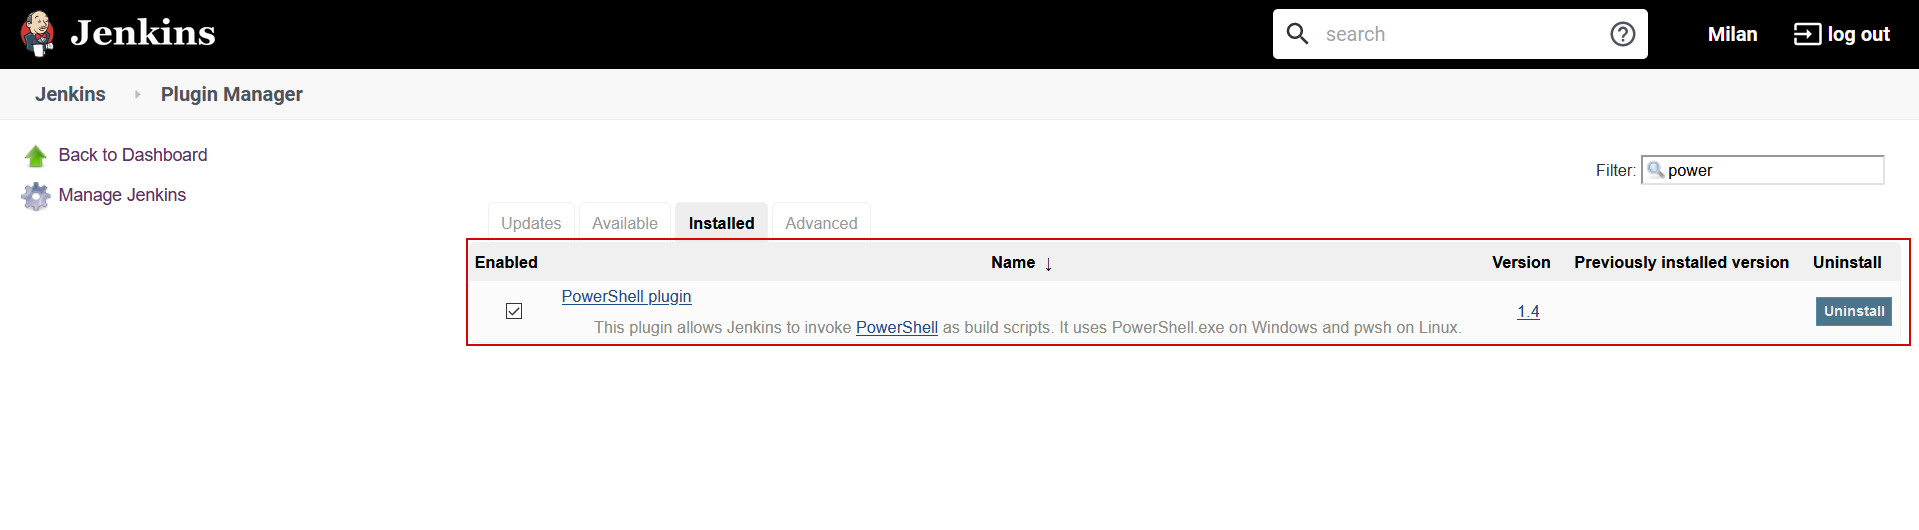 PowerShell plugin for Jenkins 